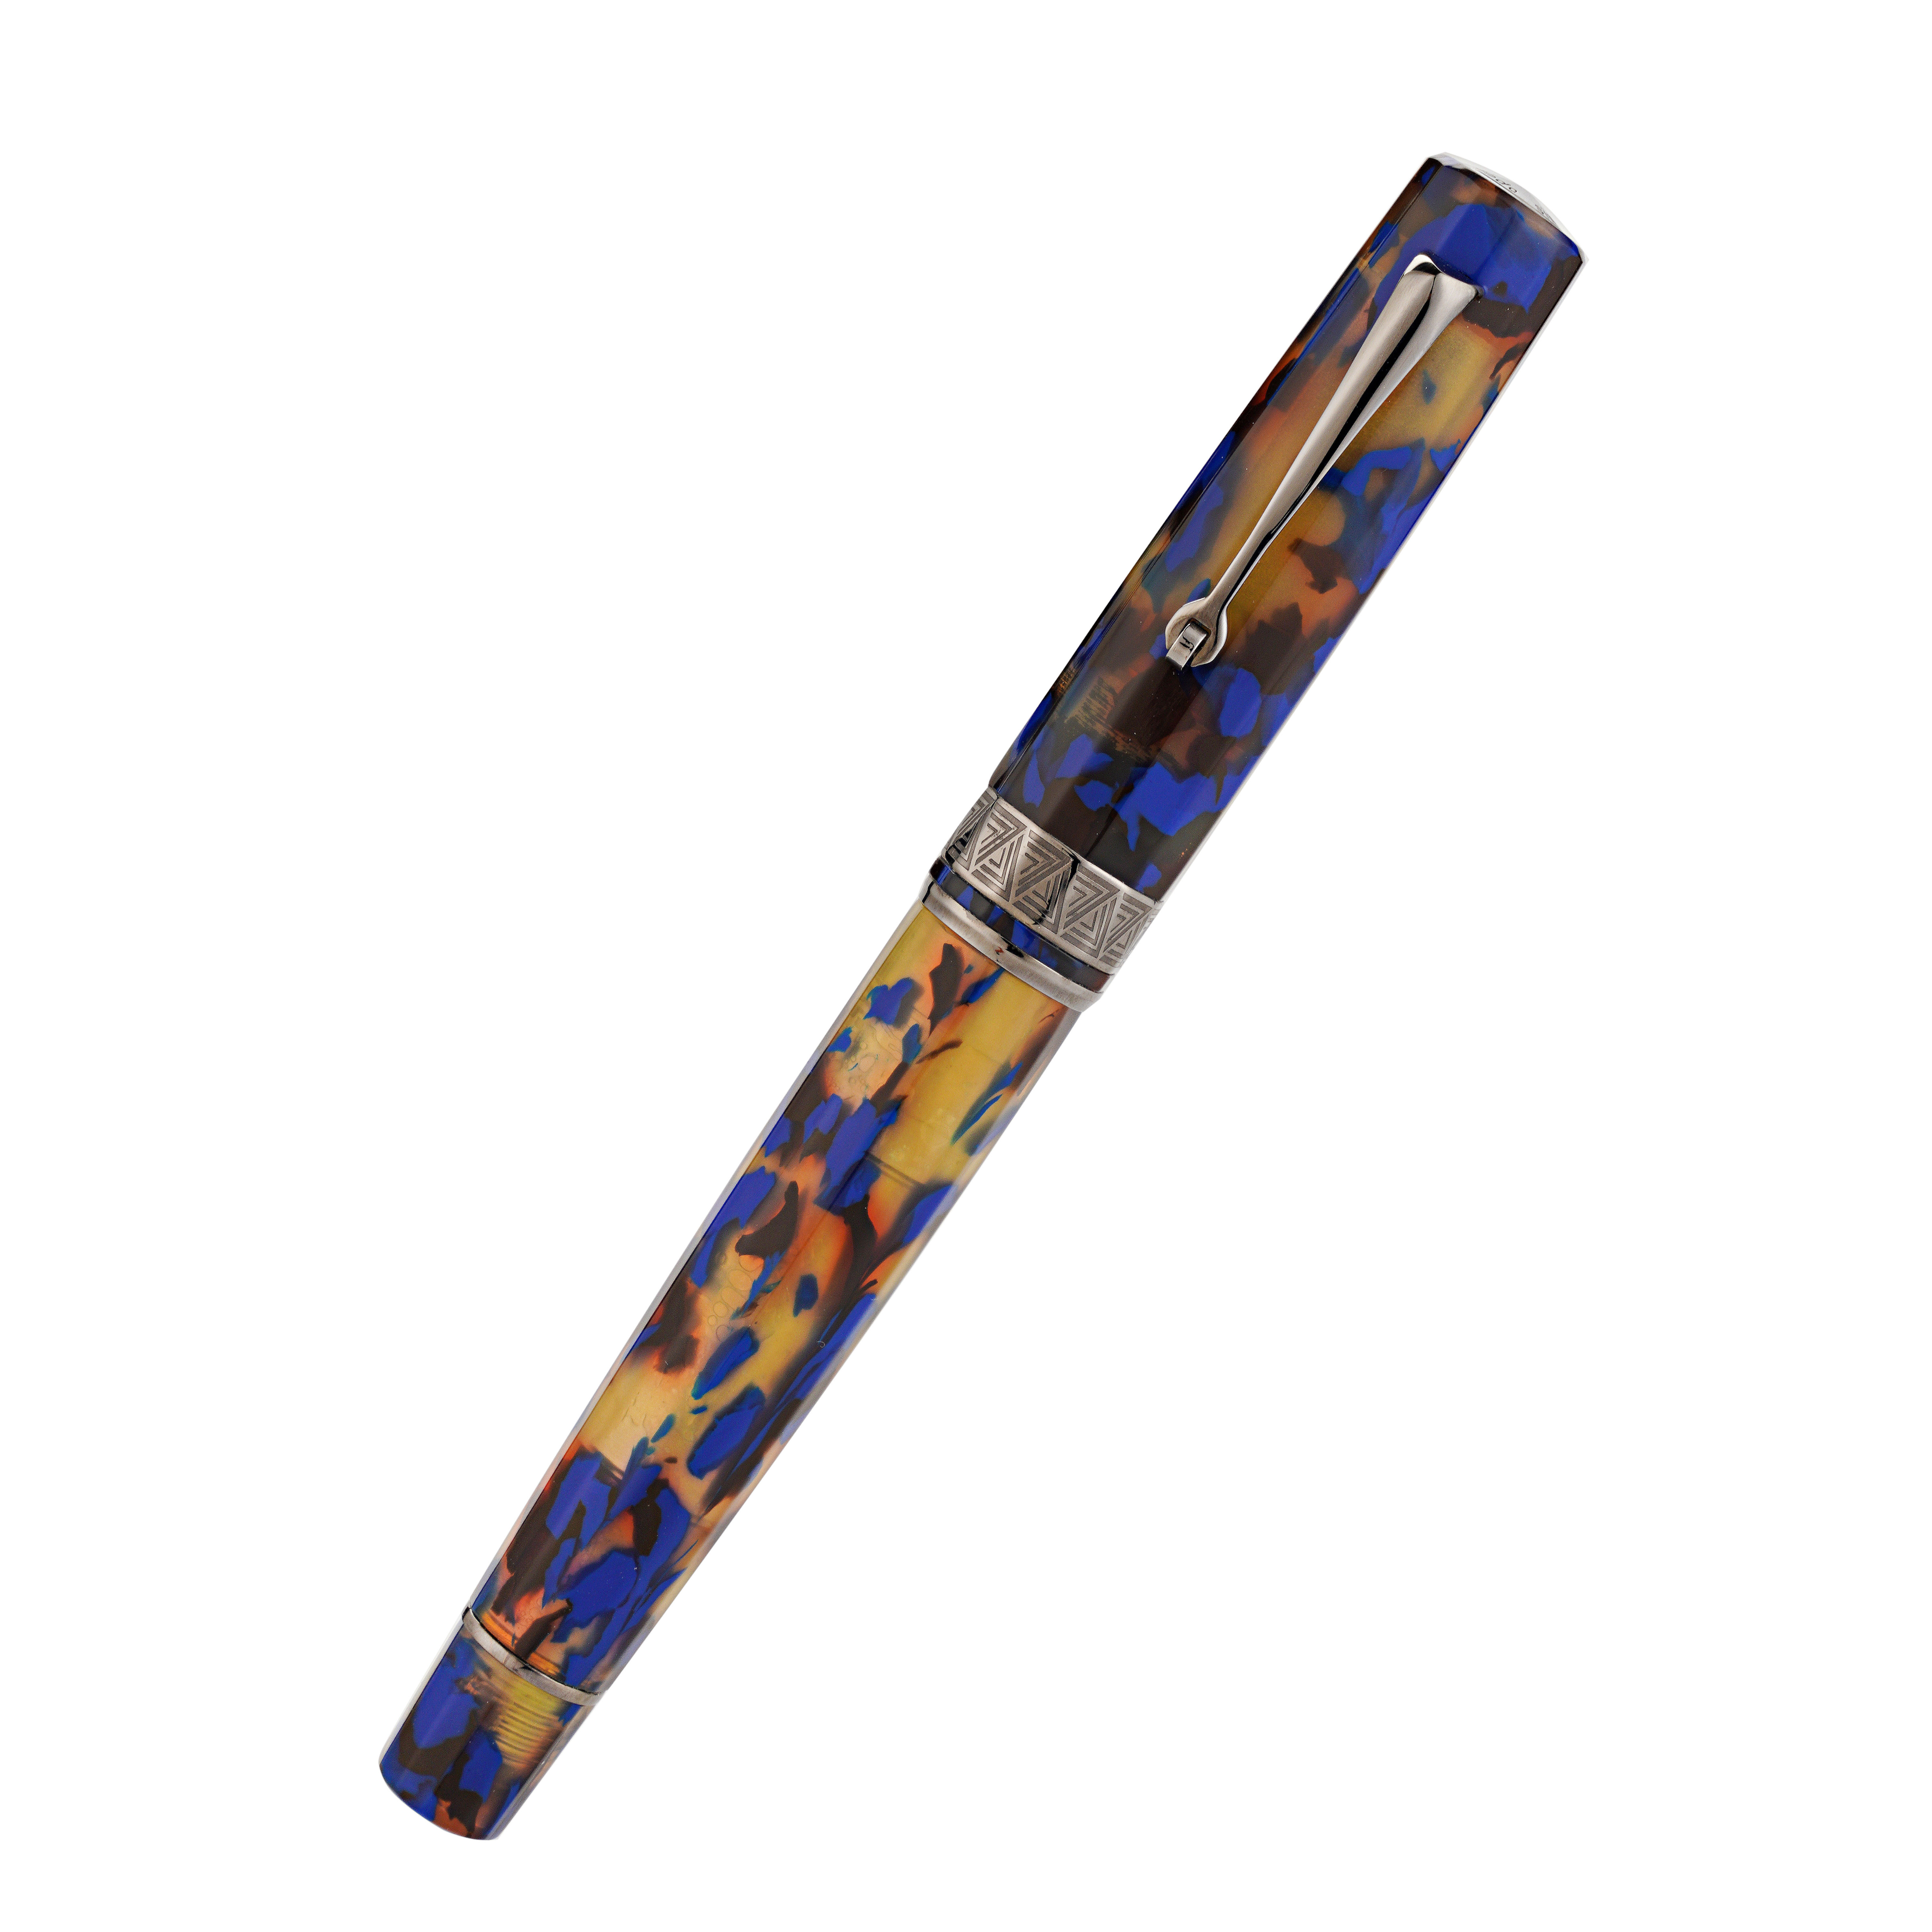 OMAS Paragon Fountain Pen in Blue Lucen with Black Trim